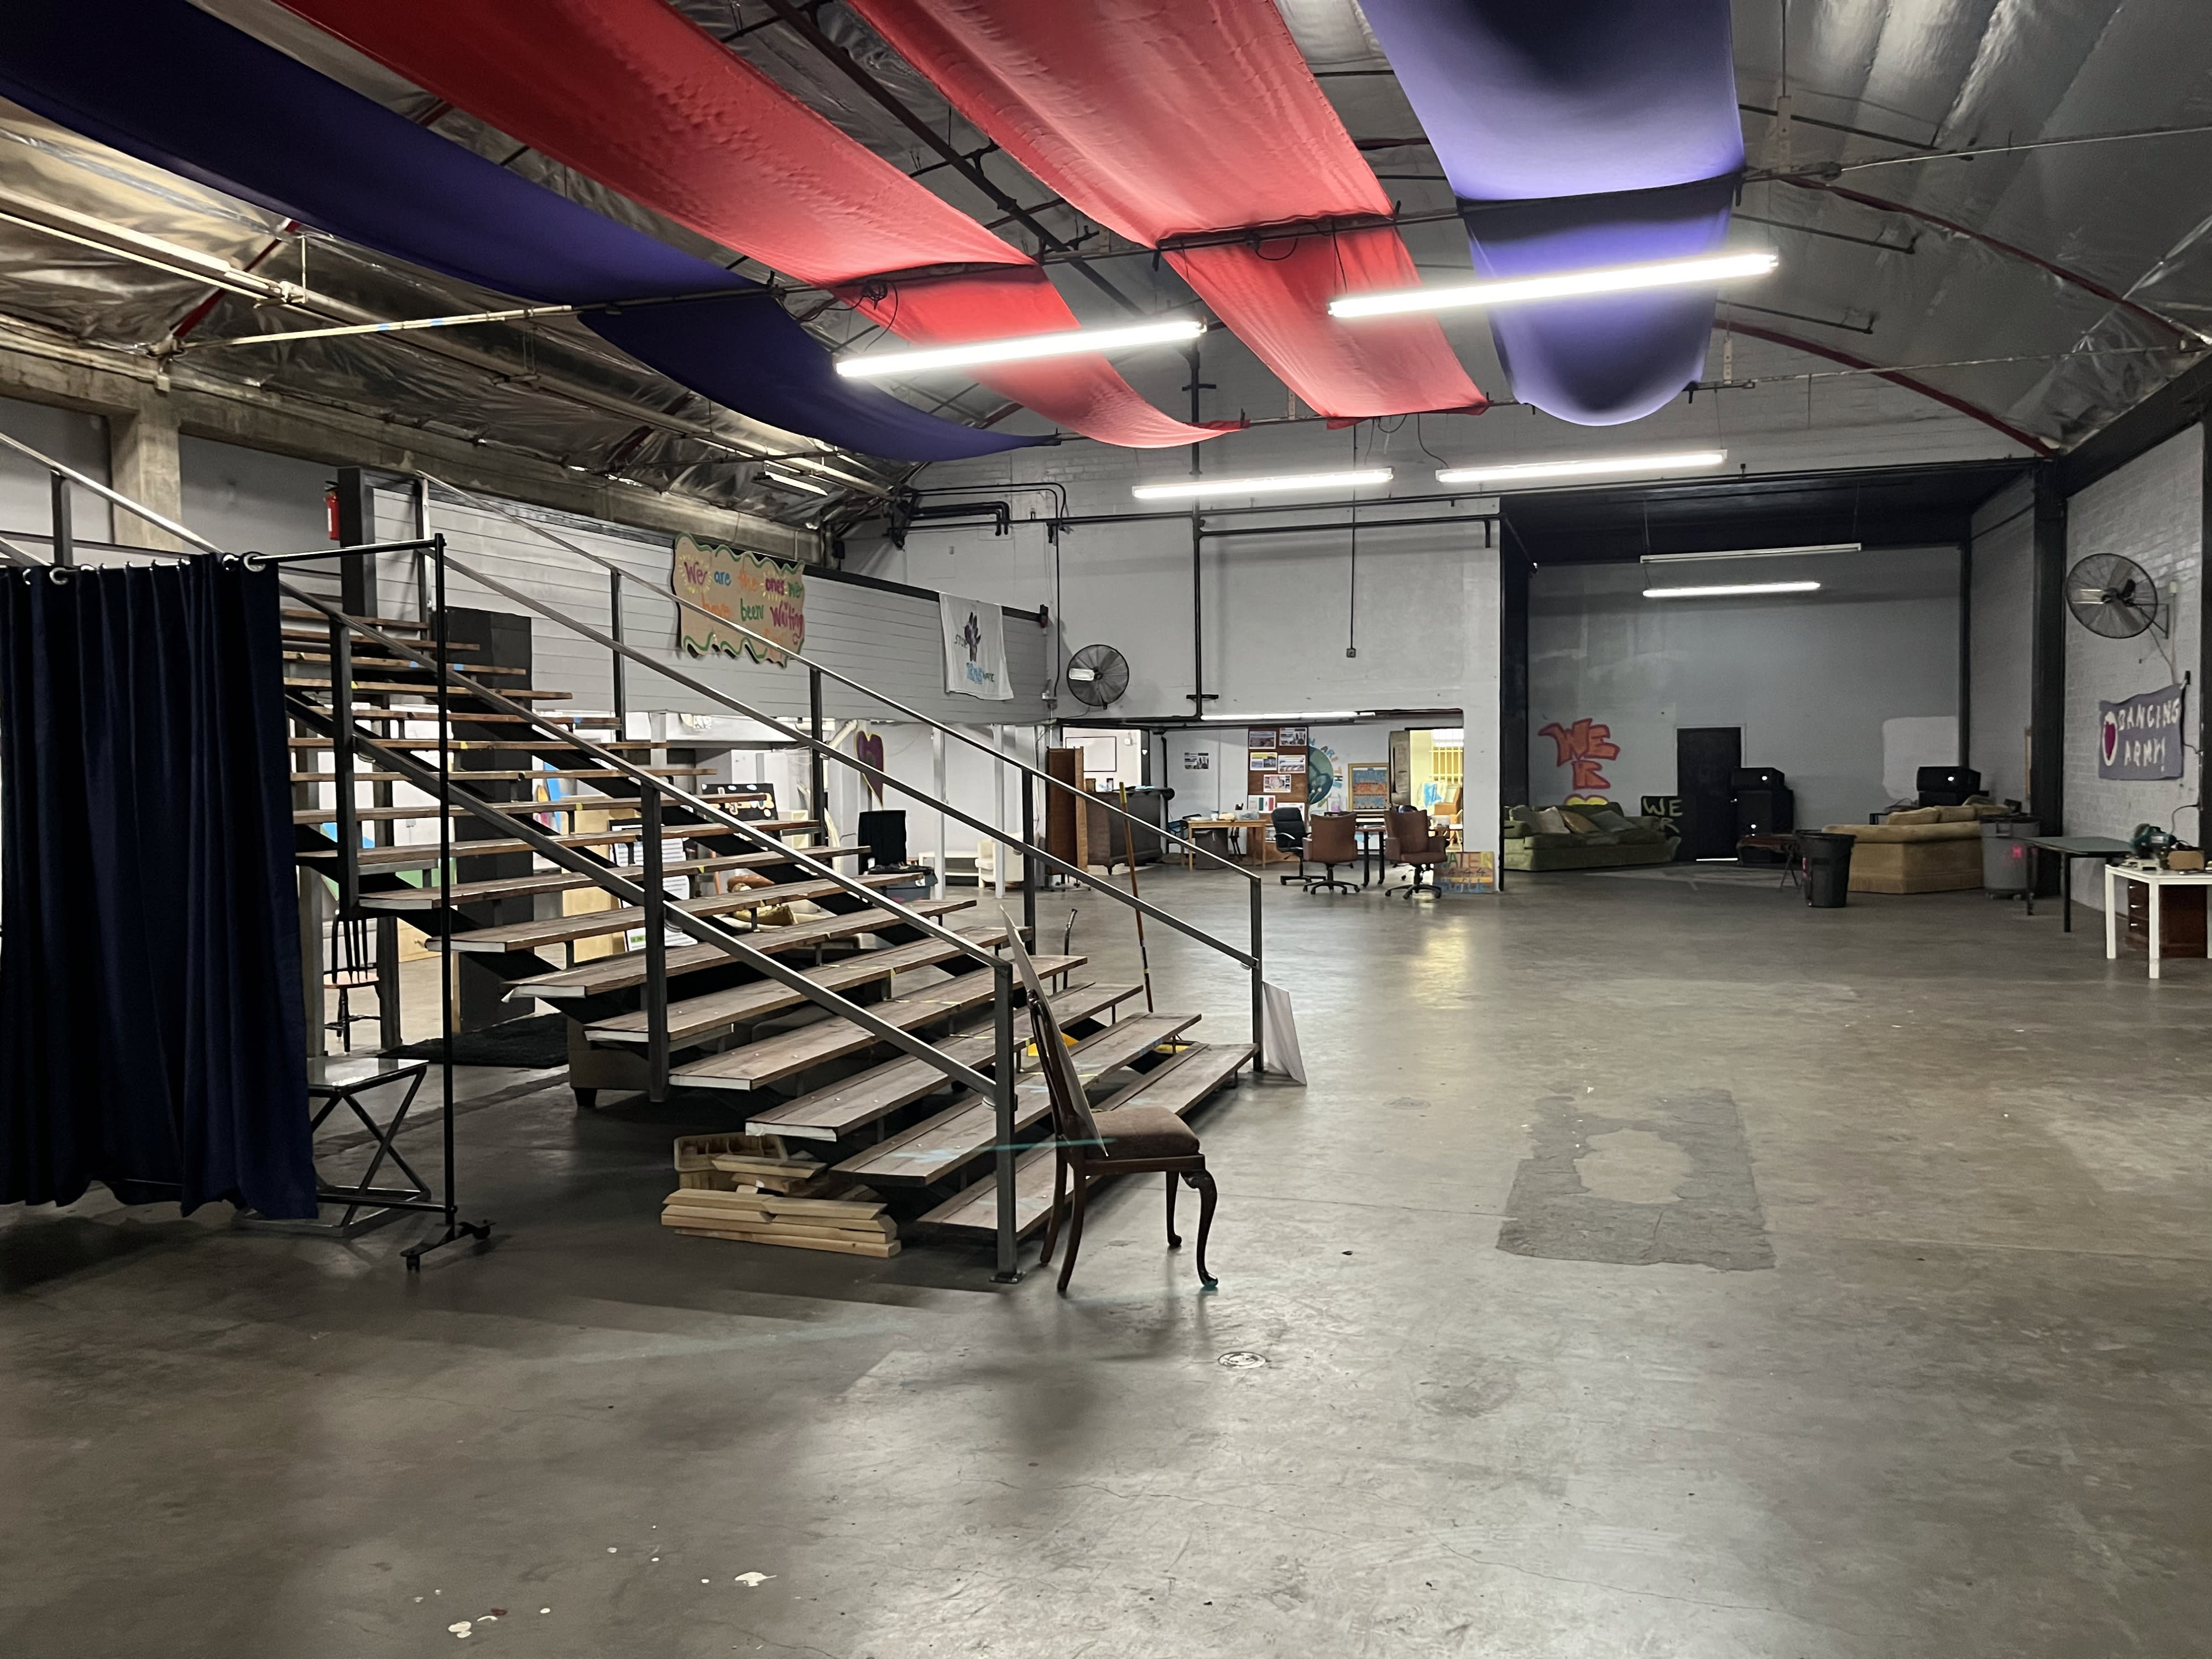 Artists Loft Industrial Warehouse – Ventra7